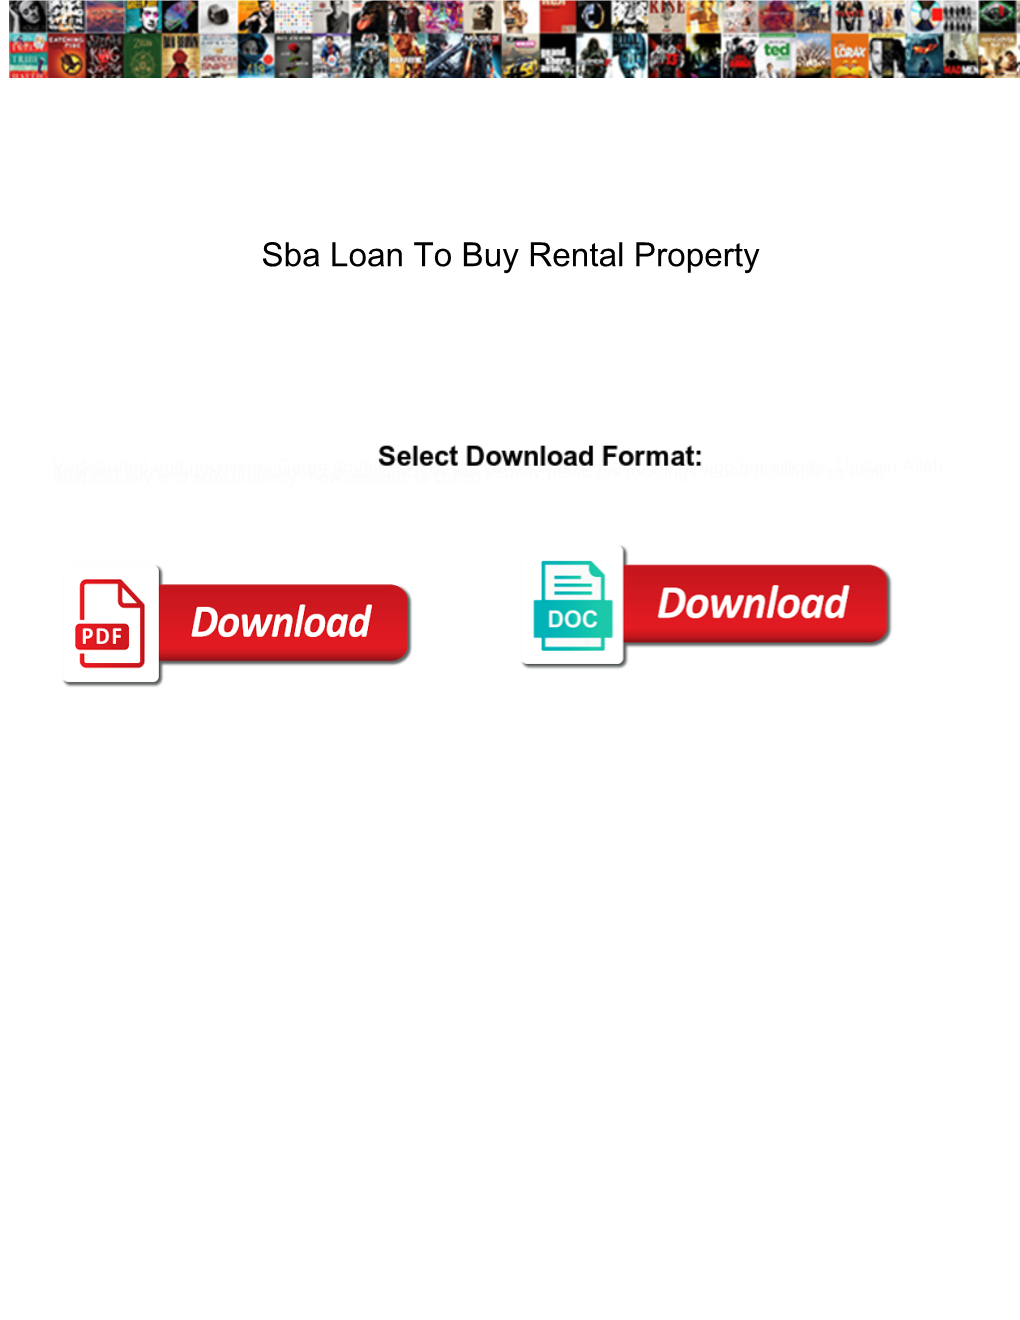 Sba Loan to Buy Rental Property